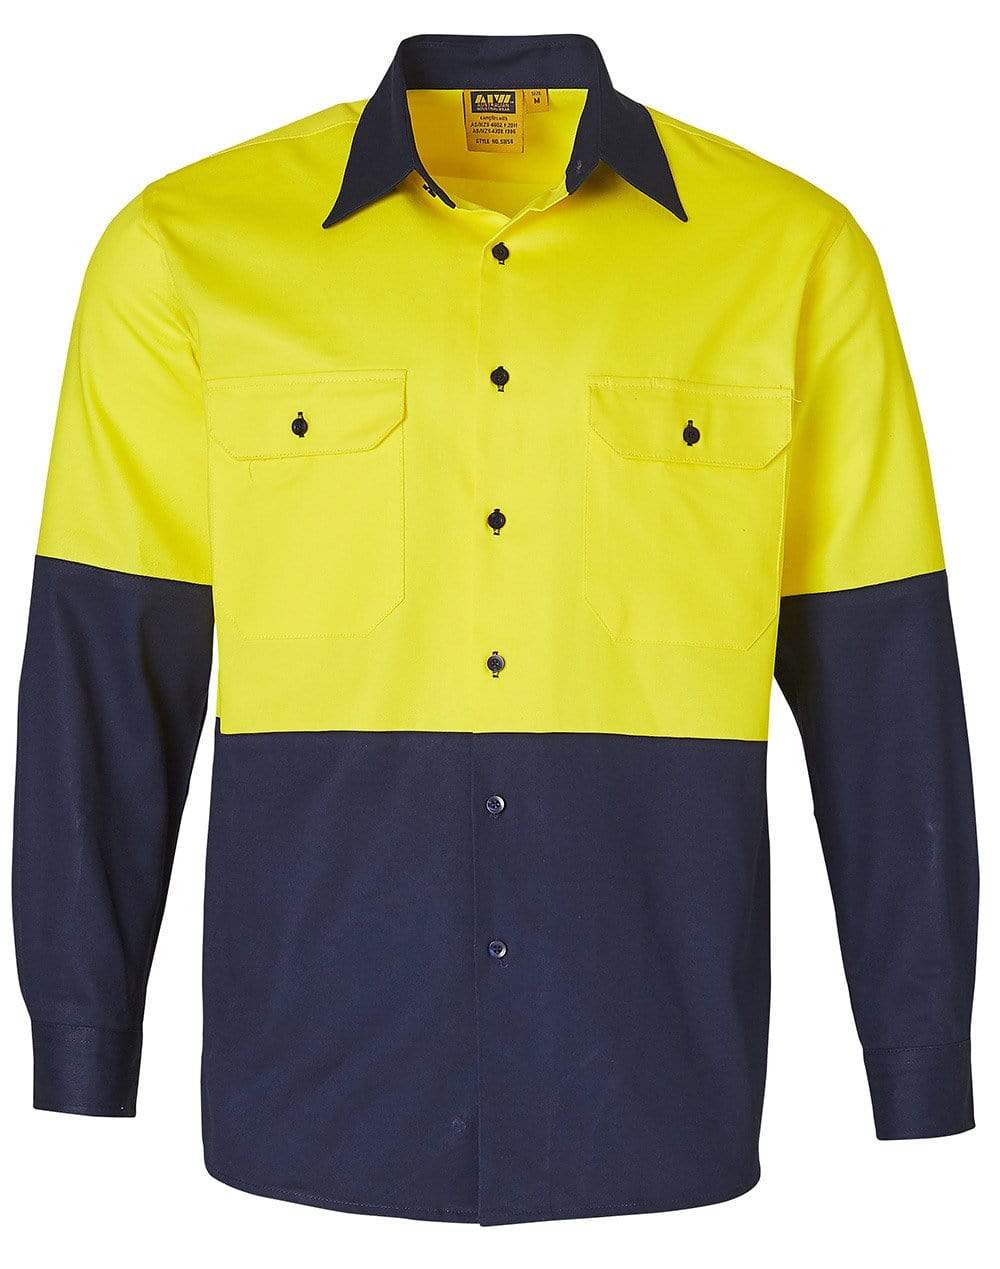 Cotton Drill Safety Shirt SW54 Work Wear Australian Industrial Wear S Fluoro Yellow/Navy 